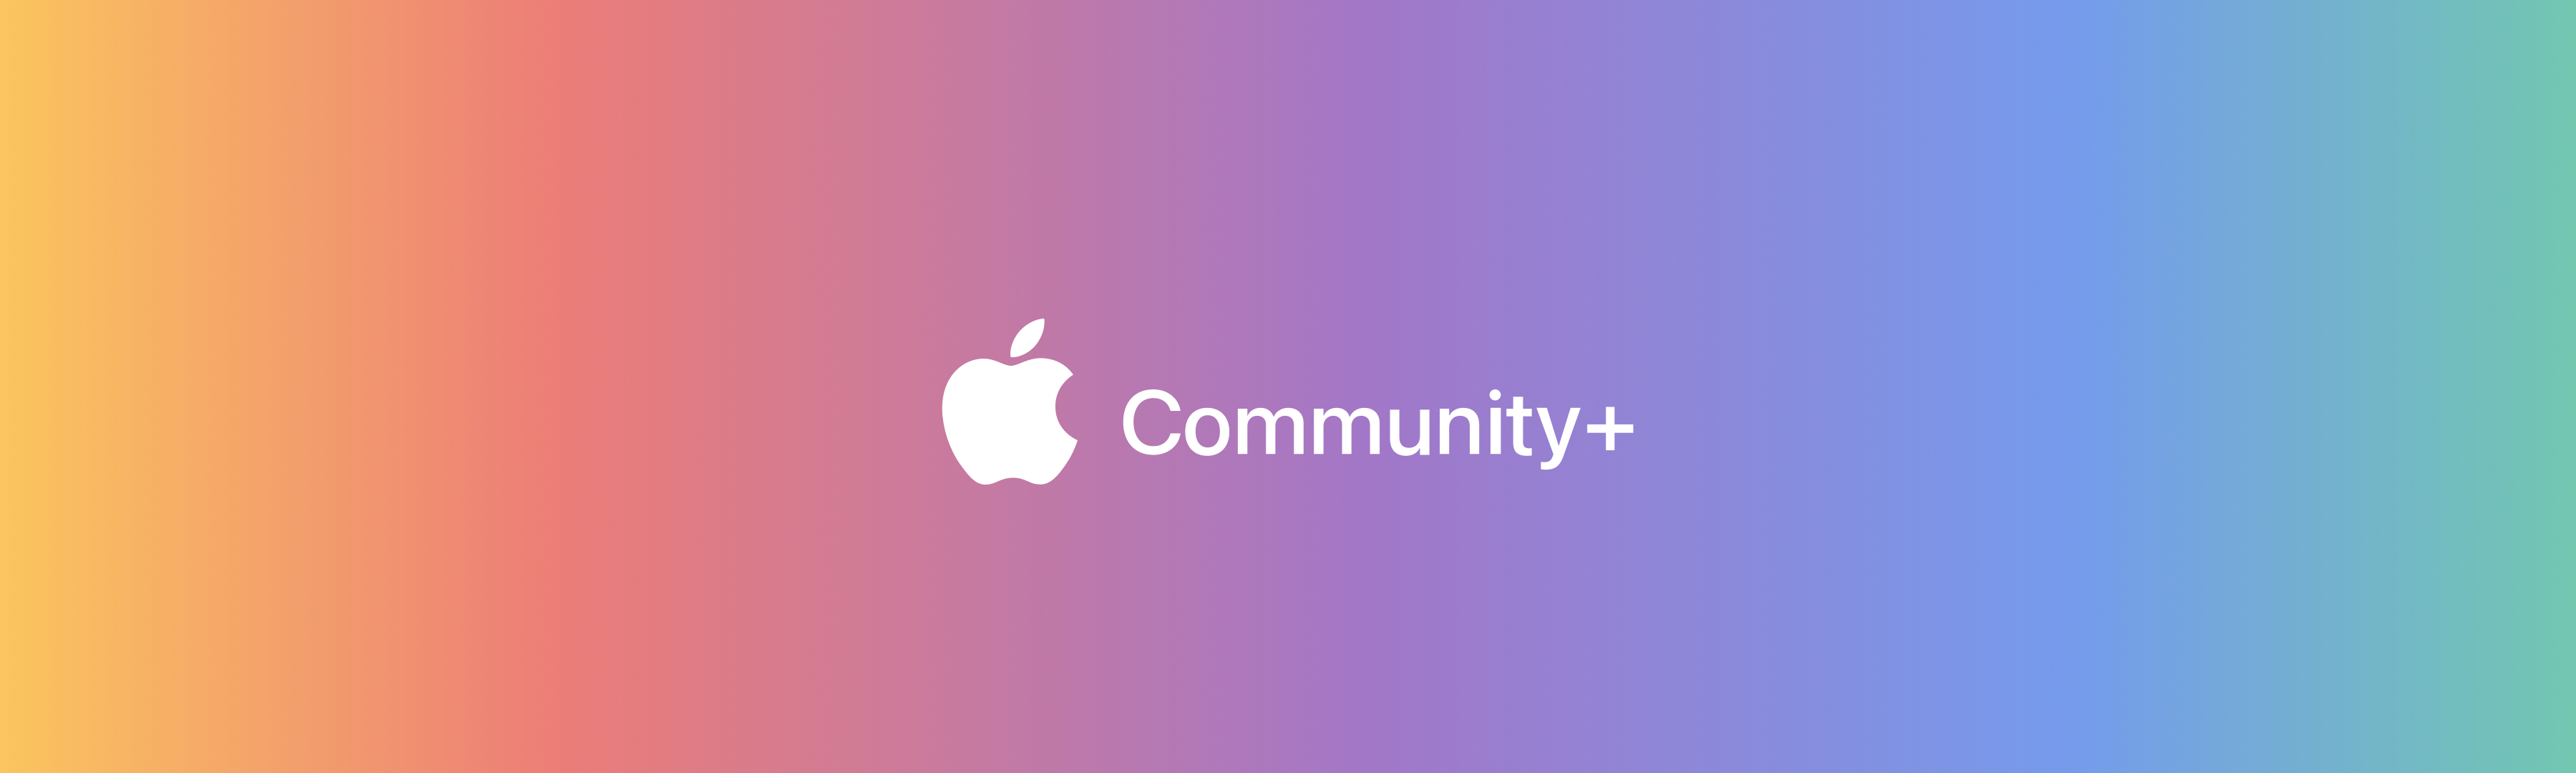 Apple_Community+